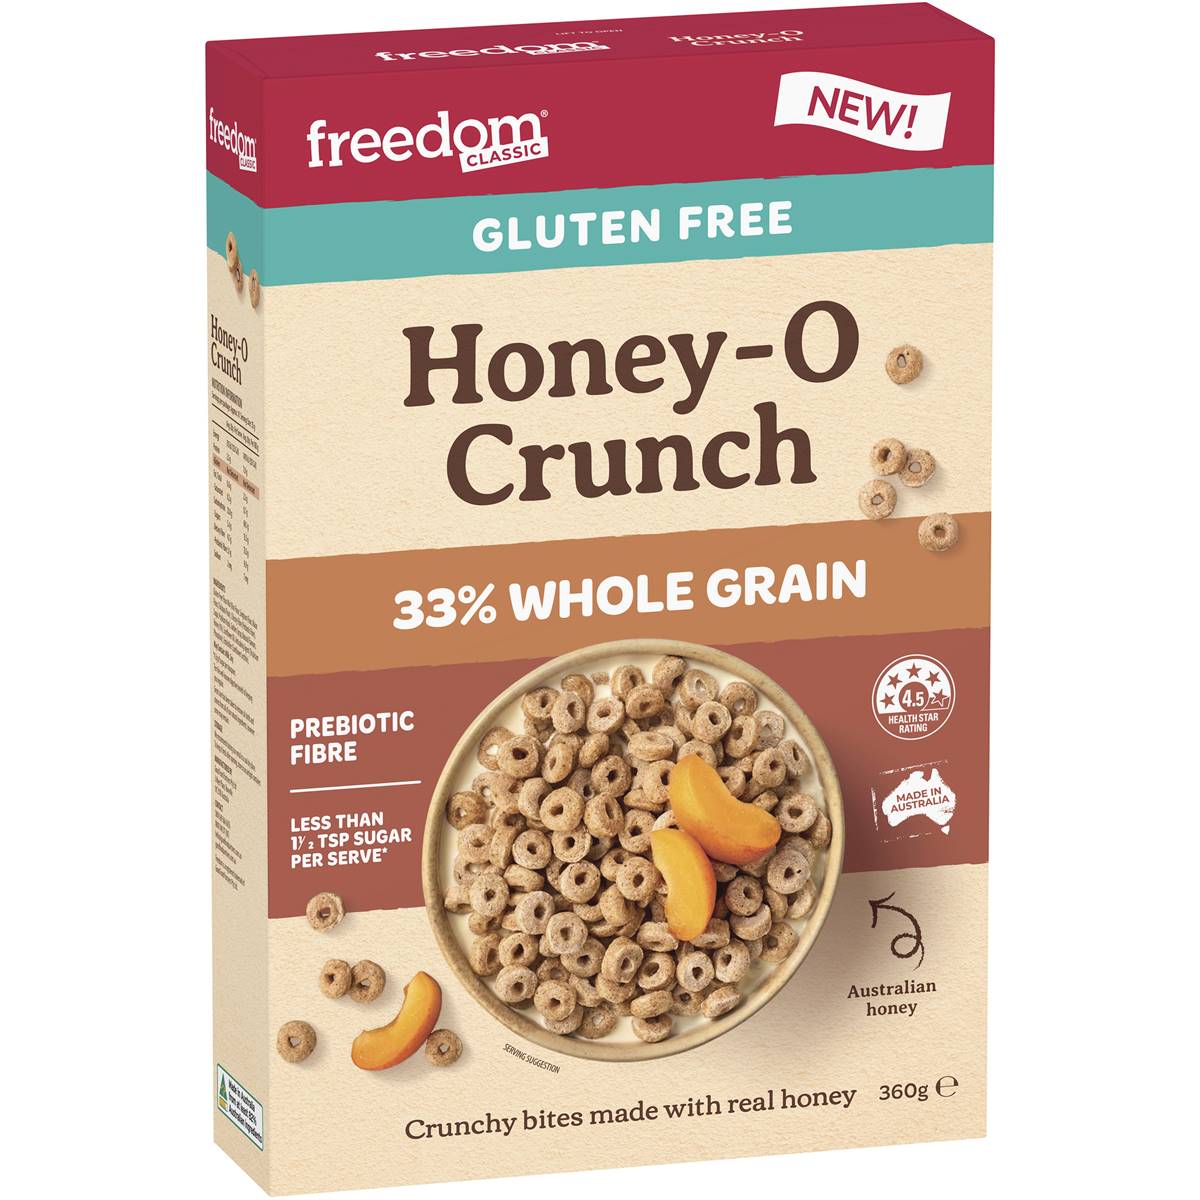 Freedom Classic Honey-o Crunch Cereal 360g